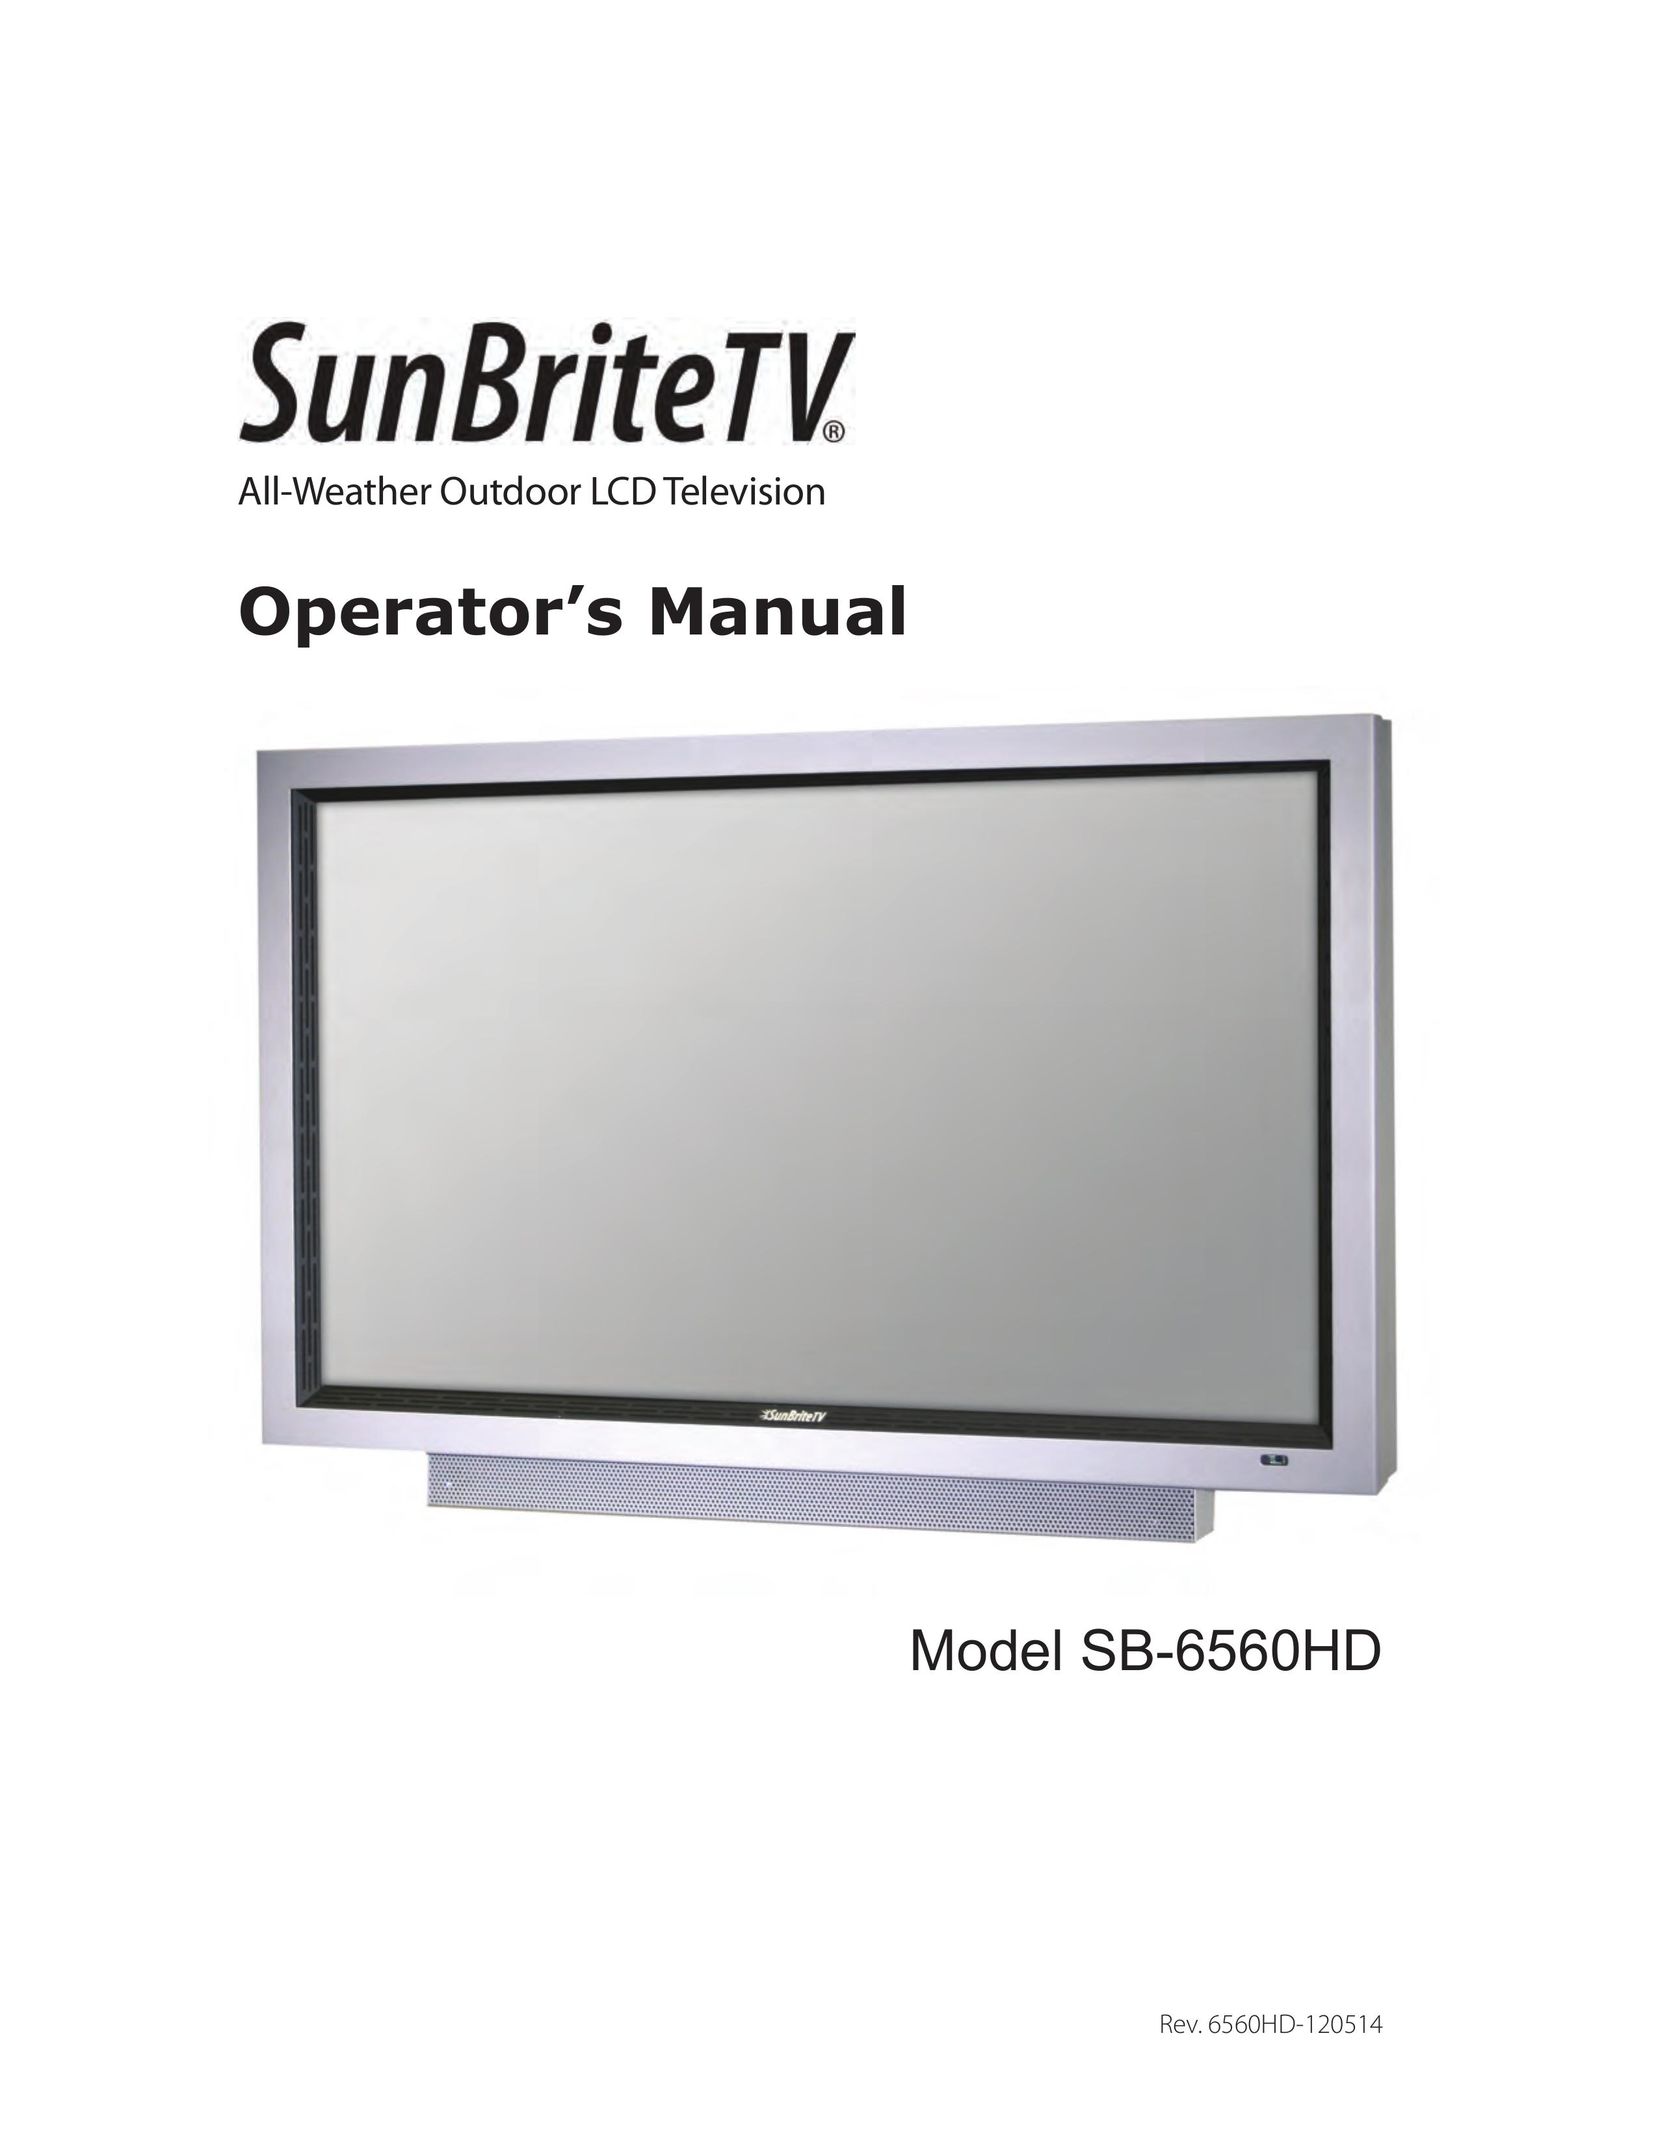 SunBriteTV SB-6560HD-BL Flat Panel Television User Manual